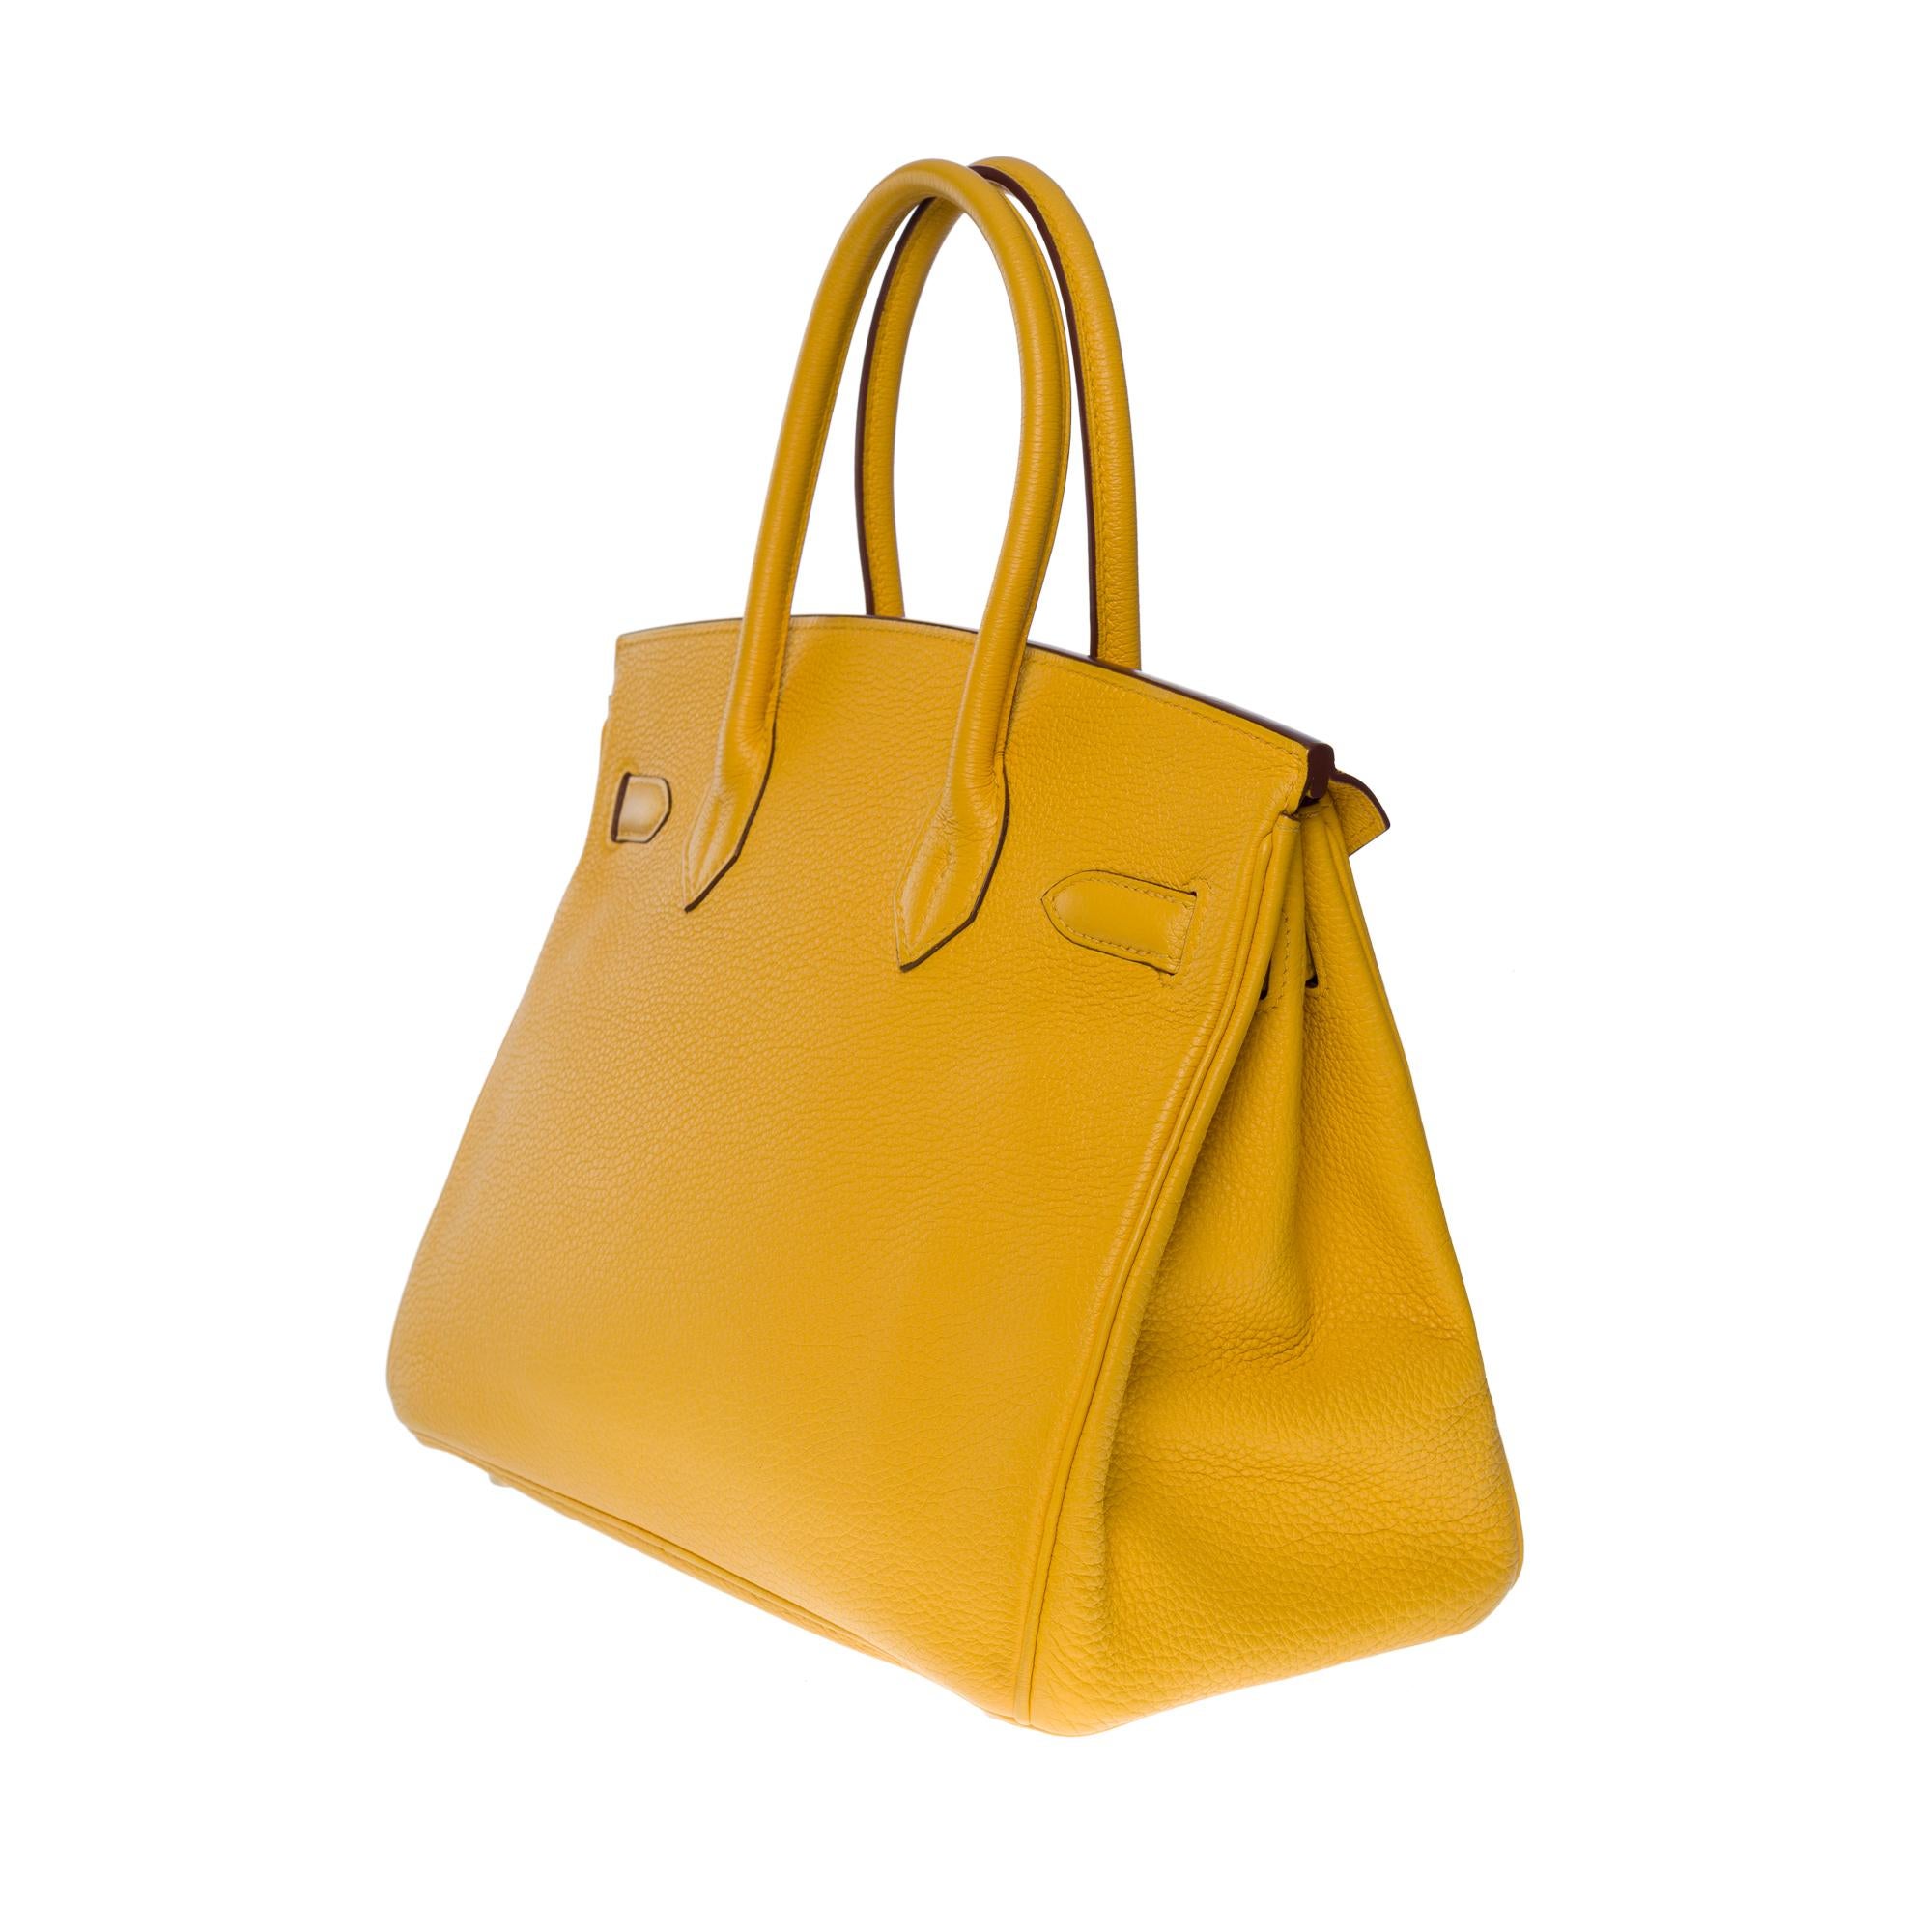 Amazing & Bright Hermès Birkin 30 handbag in Yellow Togo leather, GHW For Sale 1